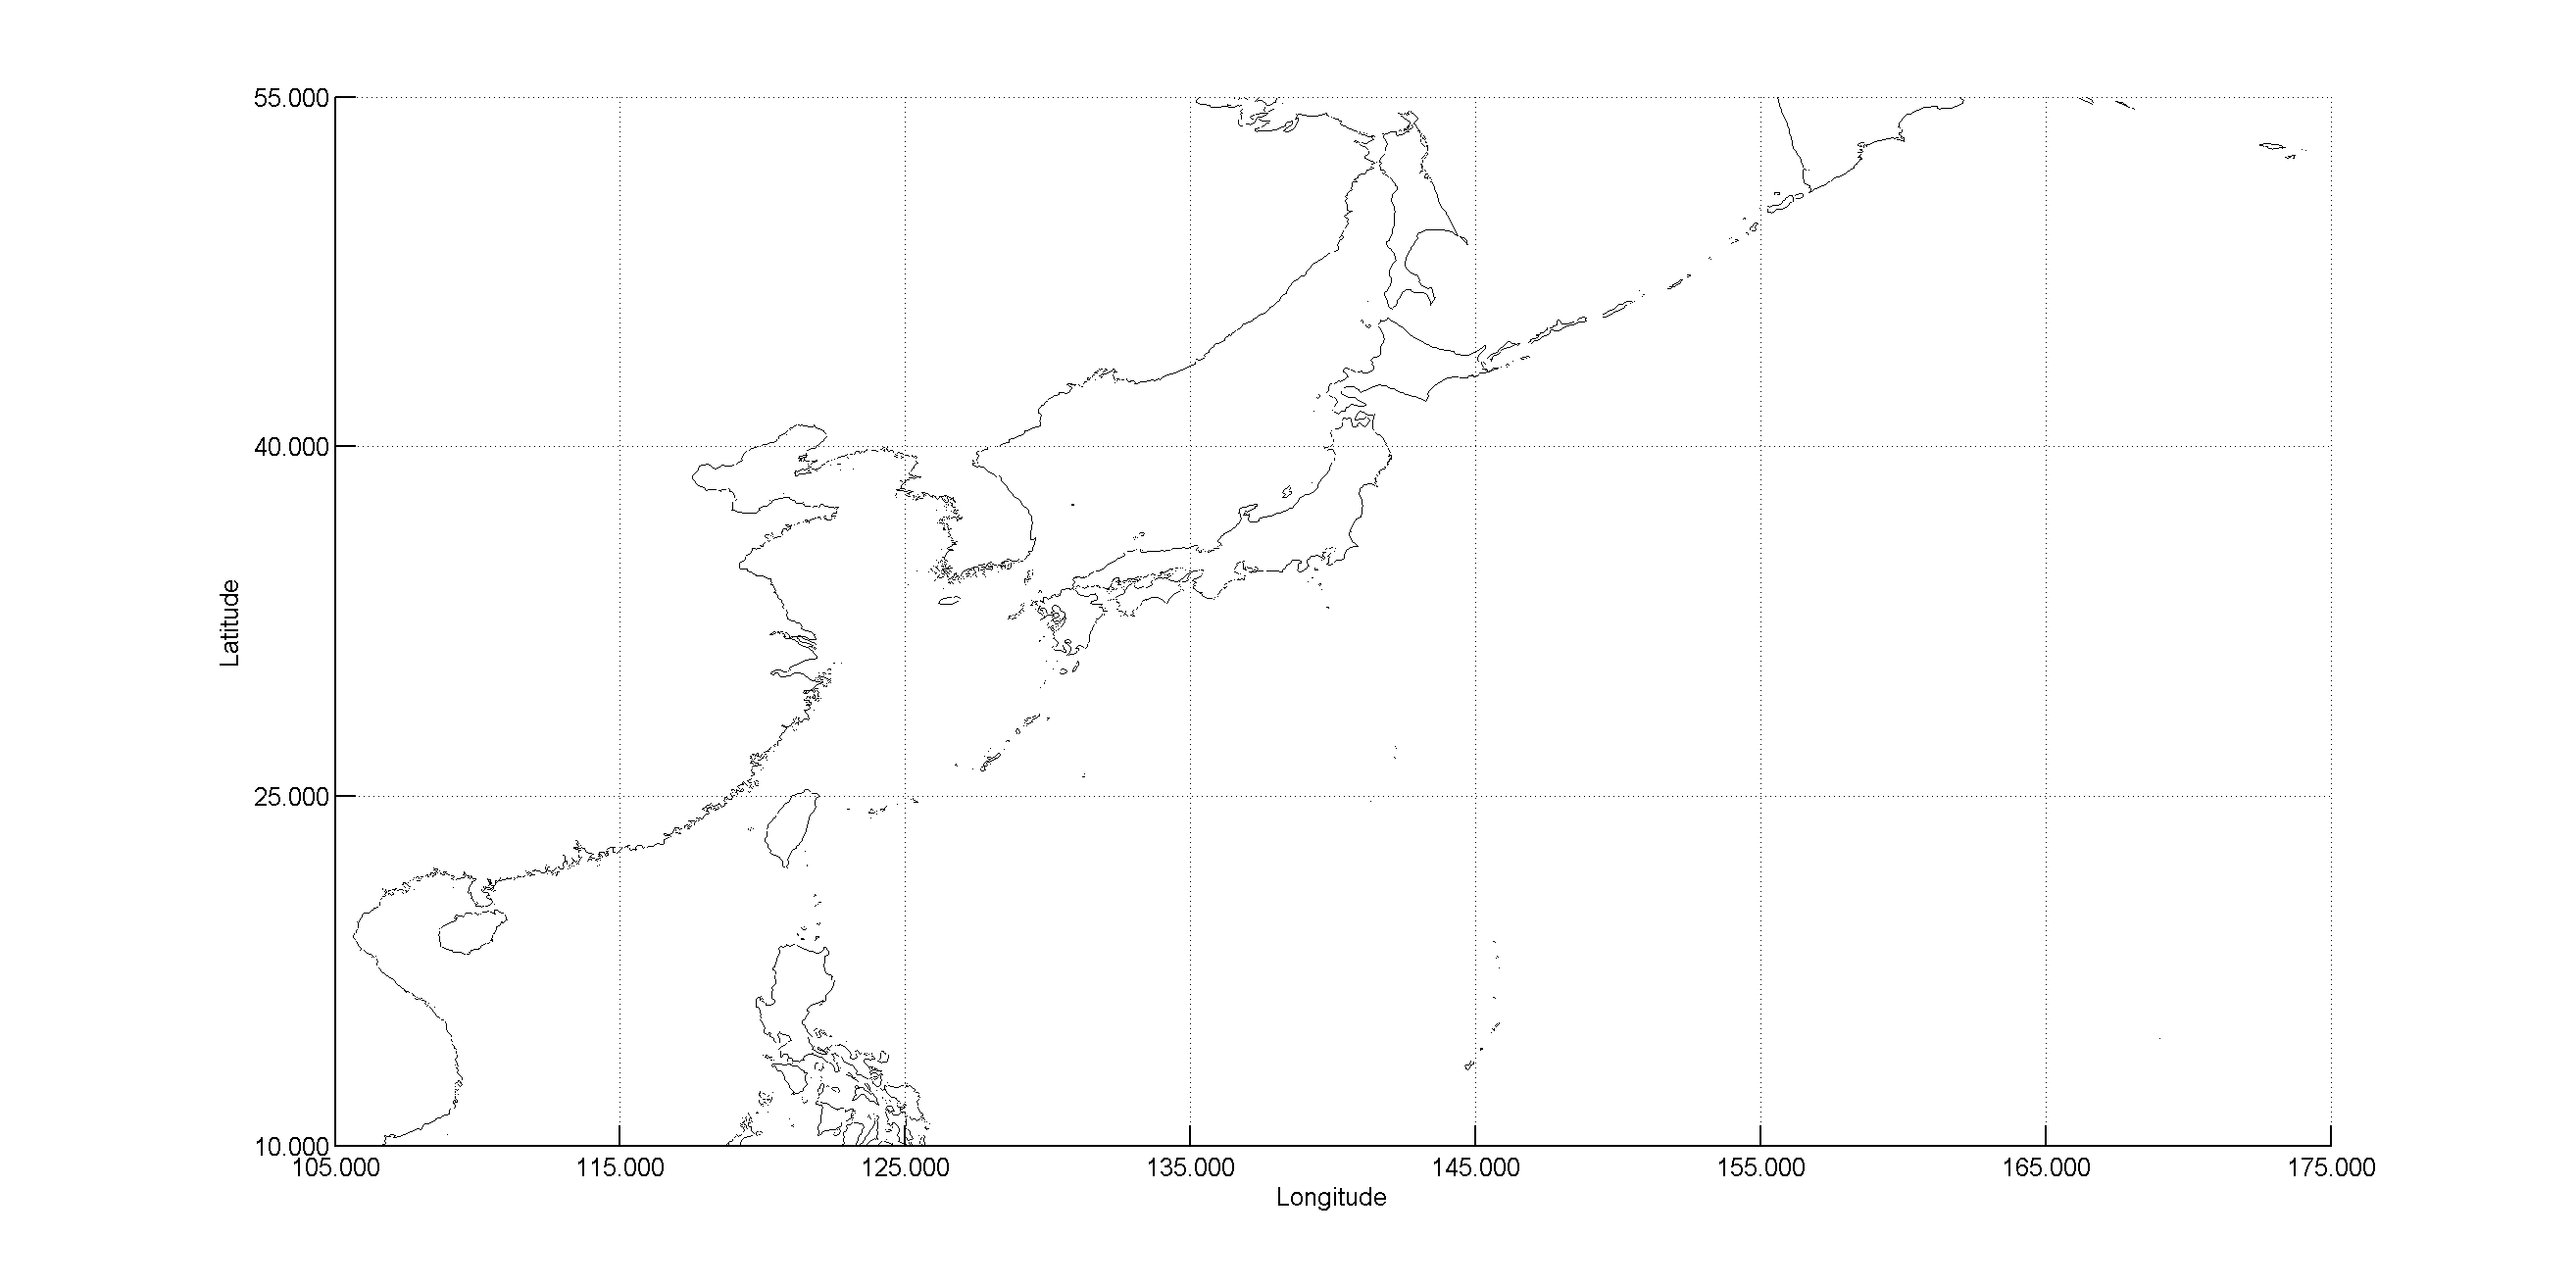 CYCLE_168 - Japan Ascending passes